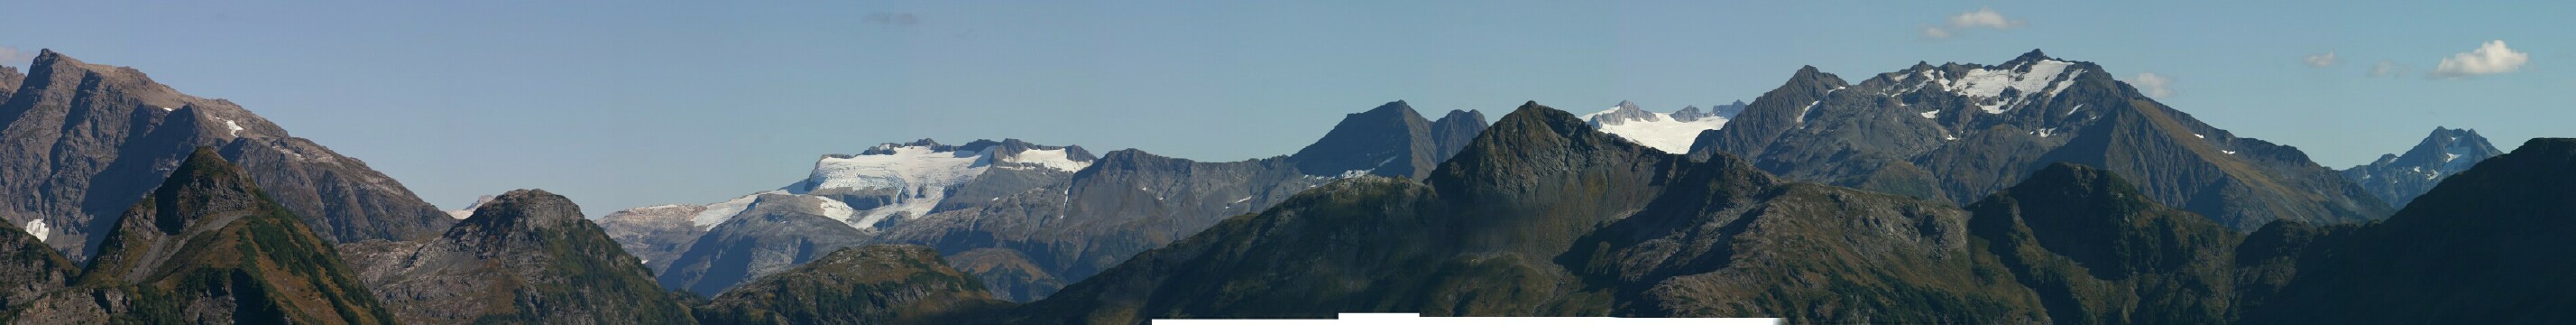 Mountain Panorama (200587 bytes)